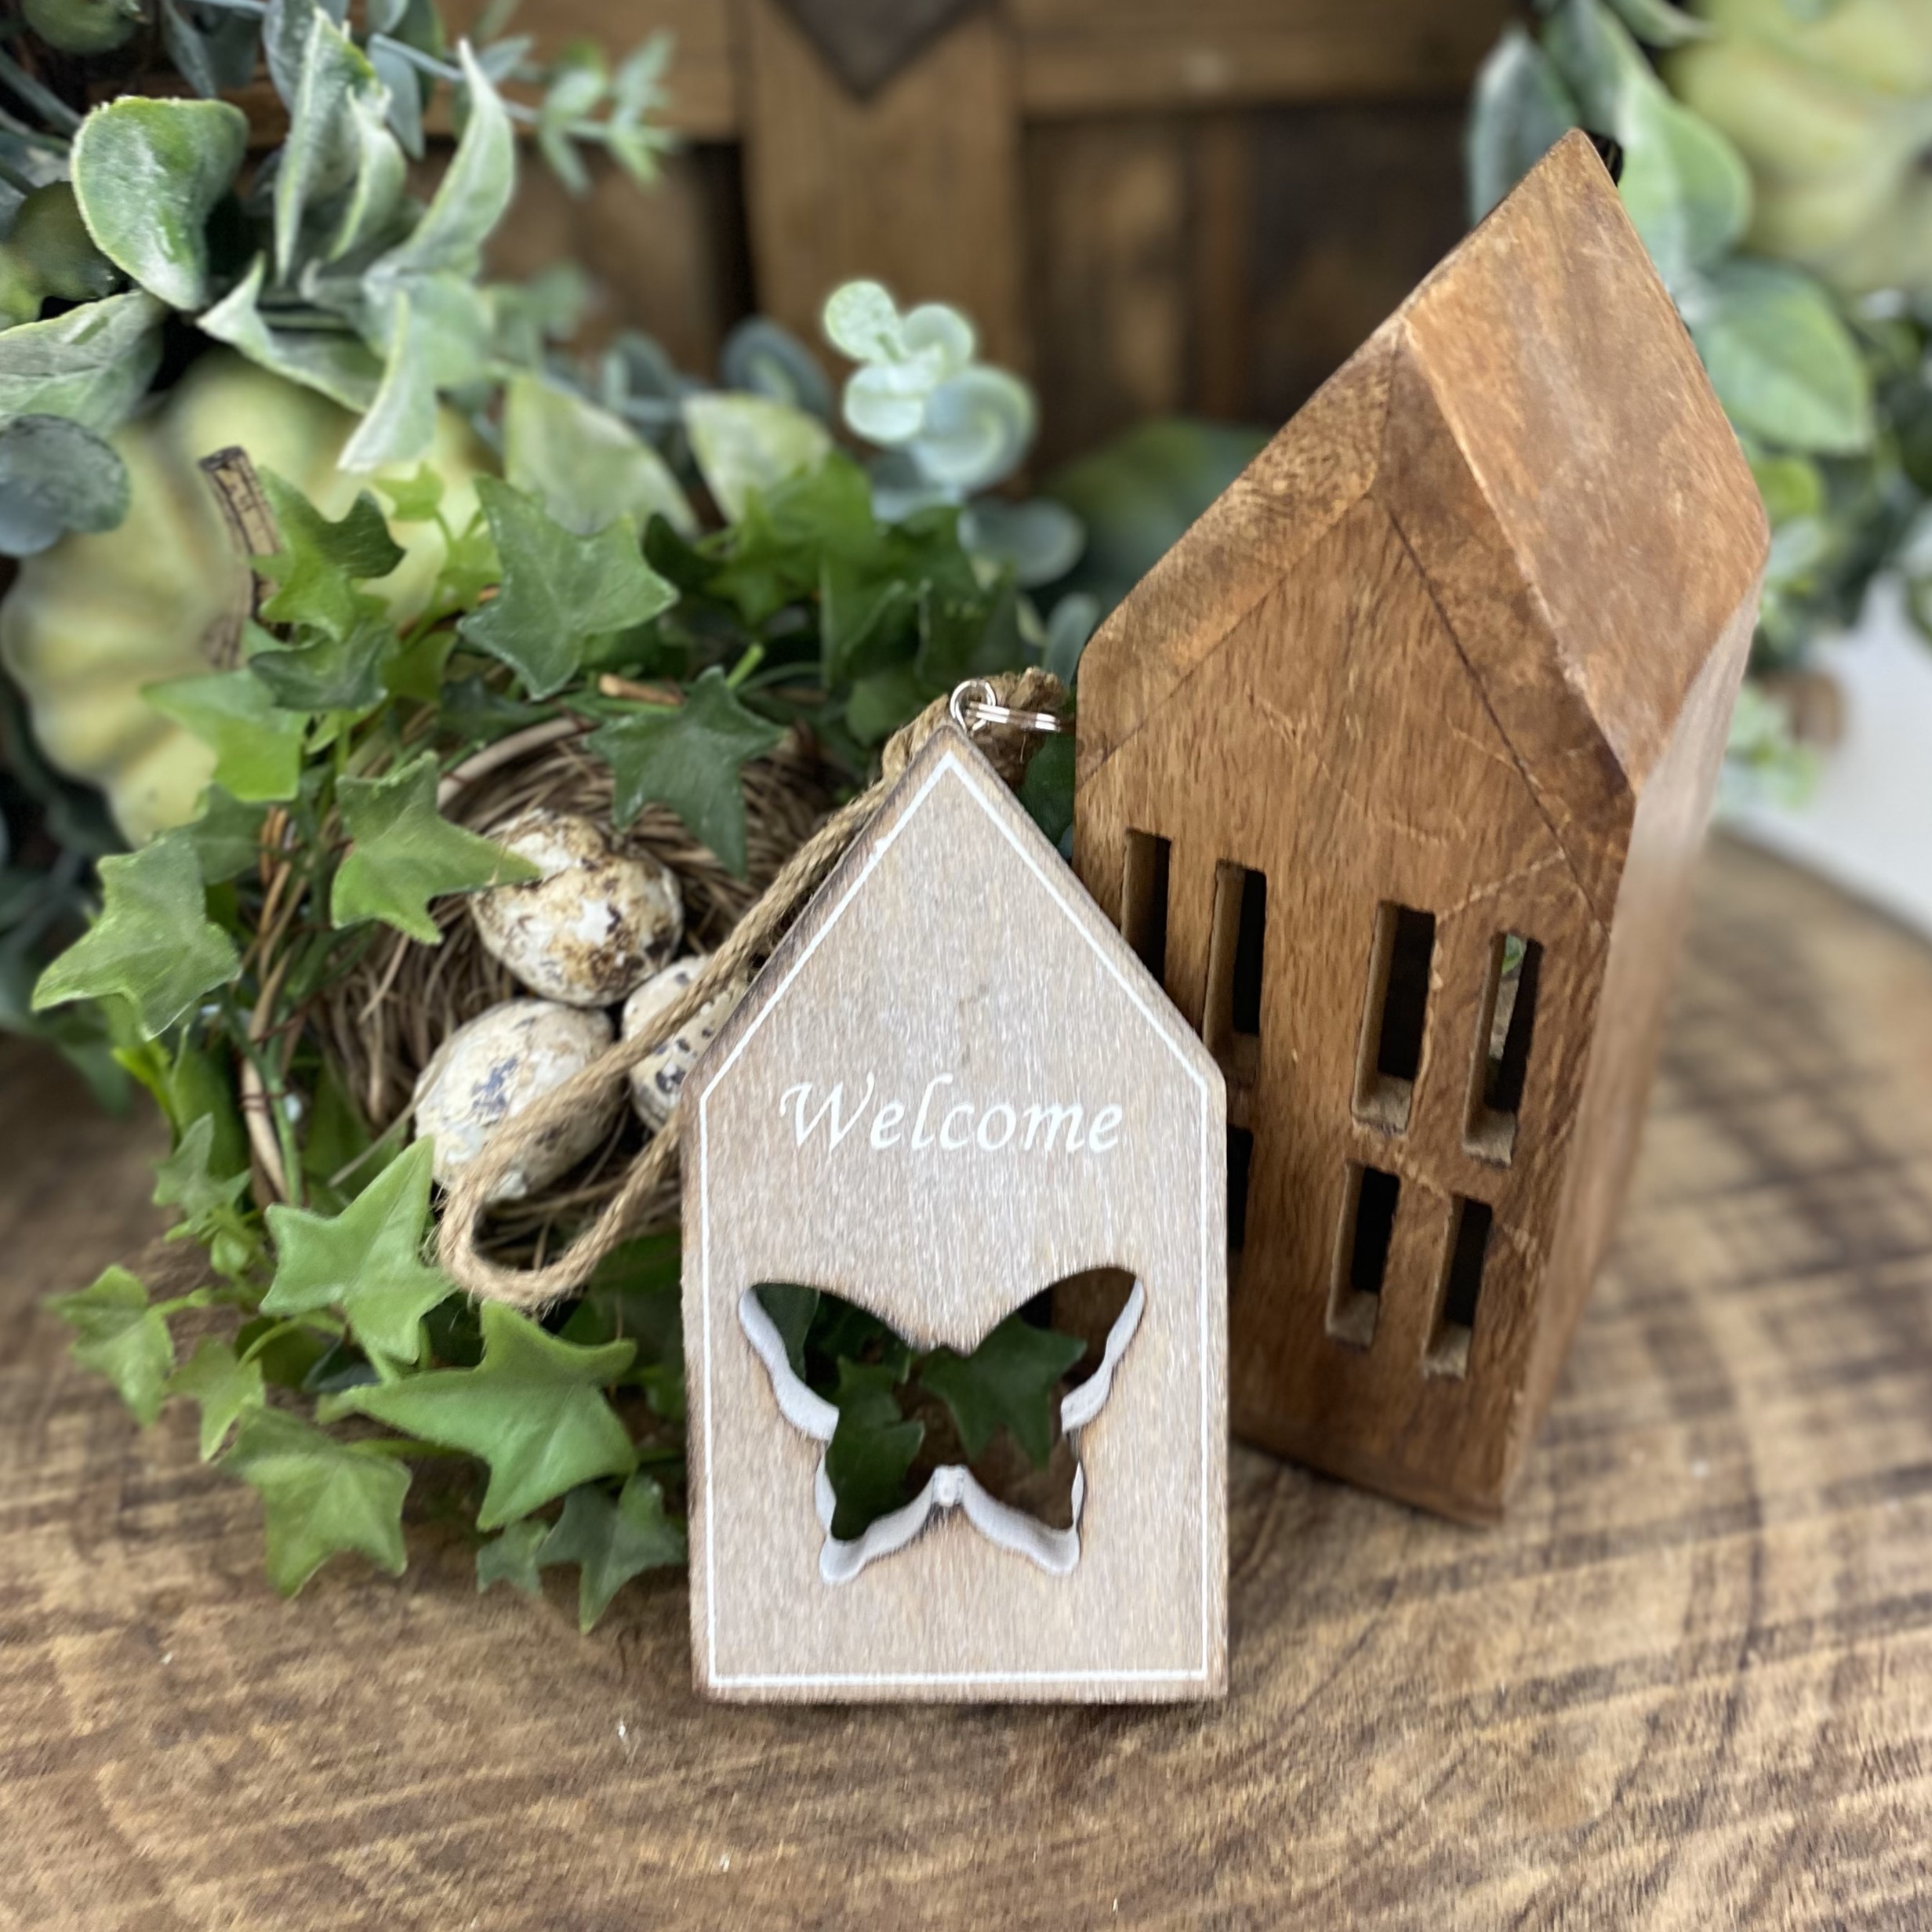 Drevený domček Welcome s vyrezaným motýľom, hnedý